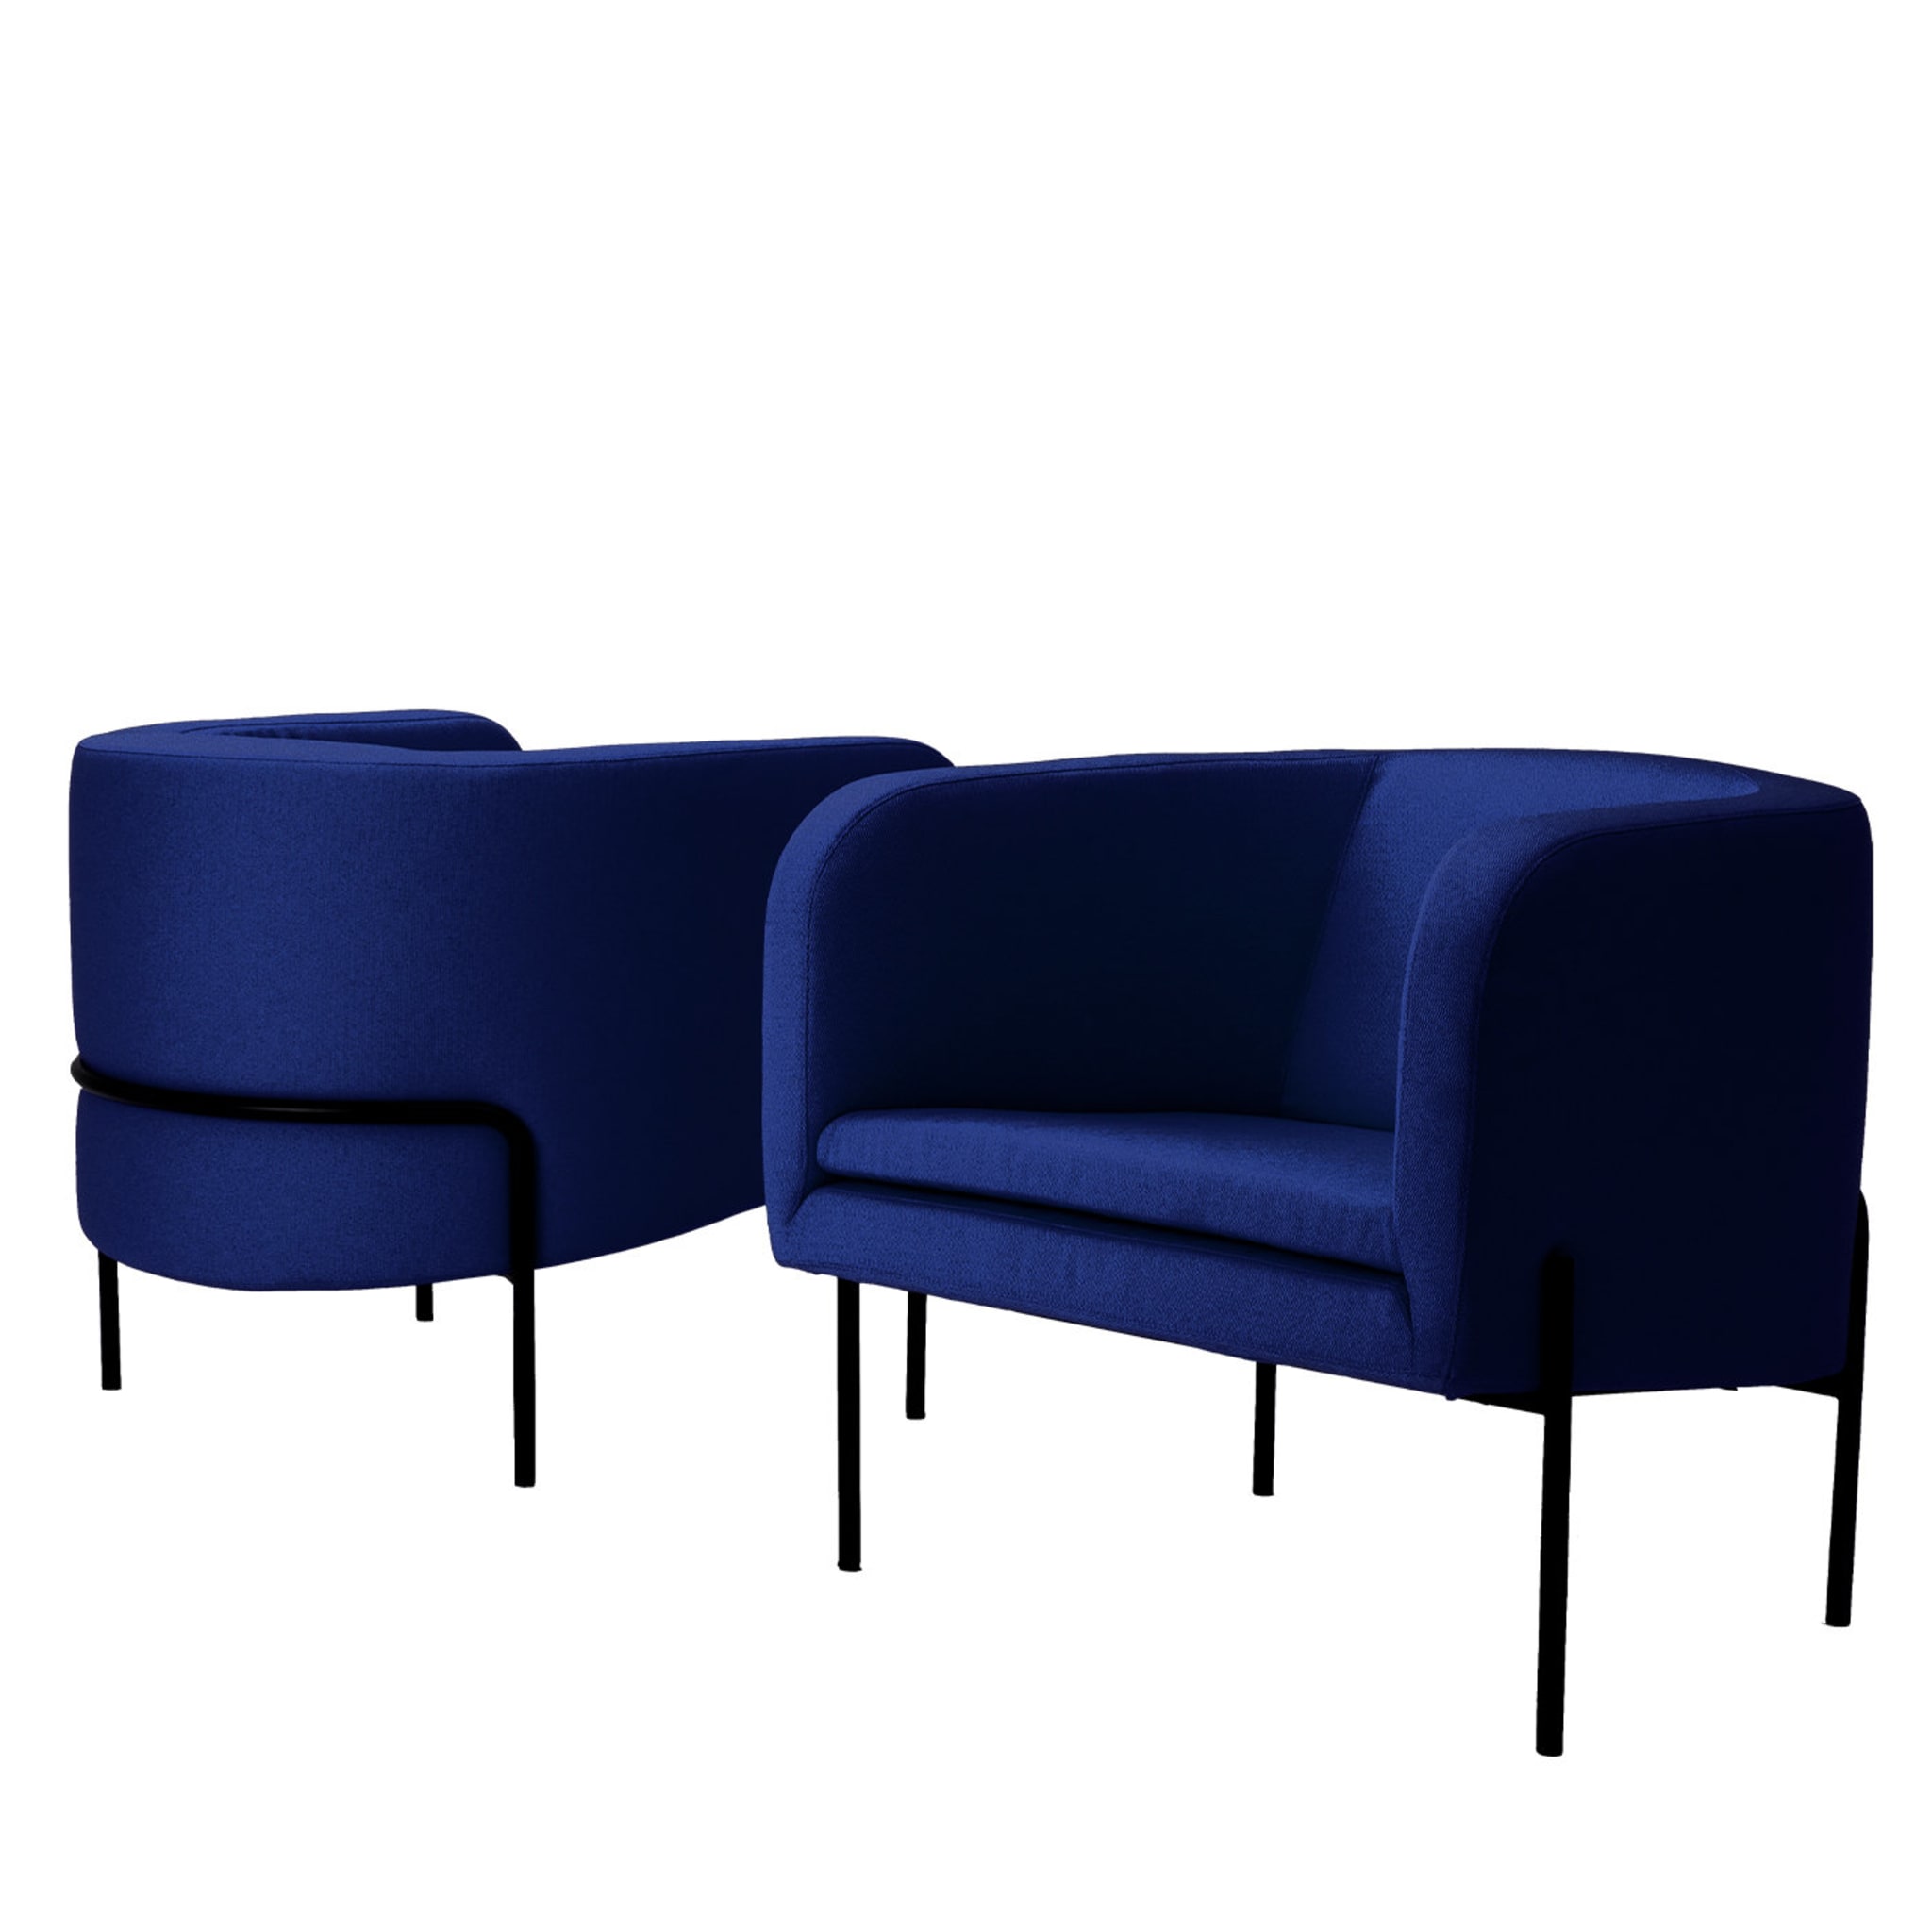 Blauer Laetitia-Sessel von Fabio Fantolino - Alternative Ansicht 3